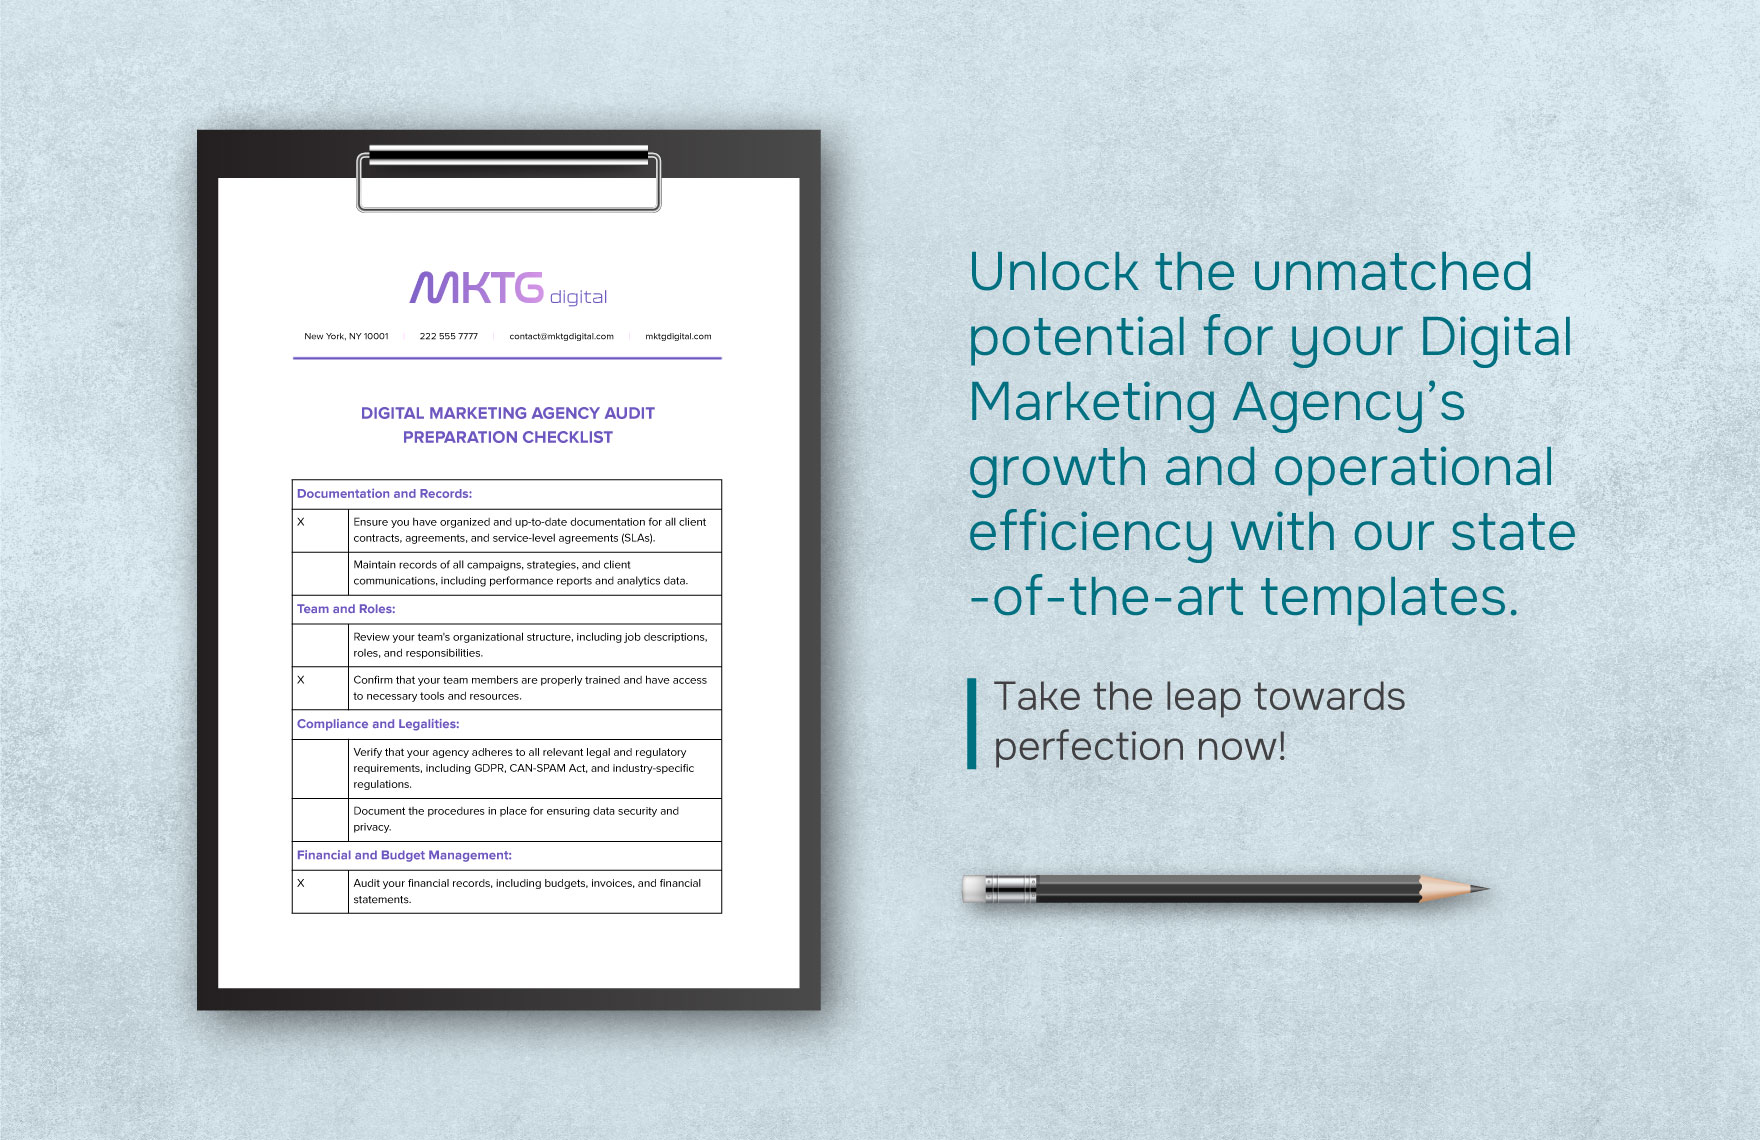 Digital Marketing Agency Audit Preparation Checklist Template